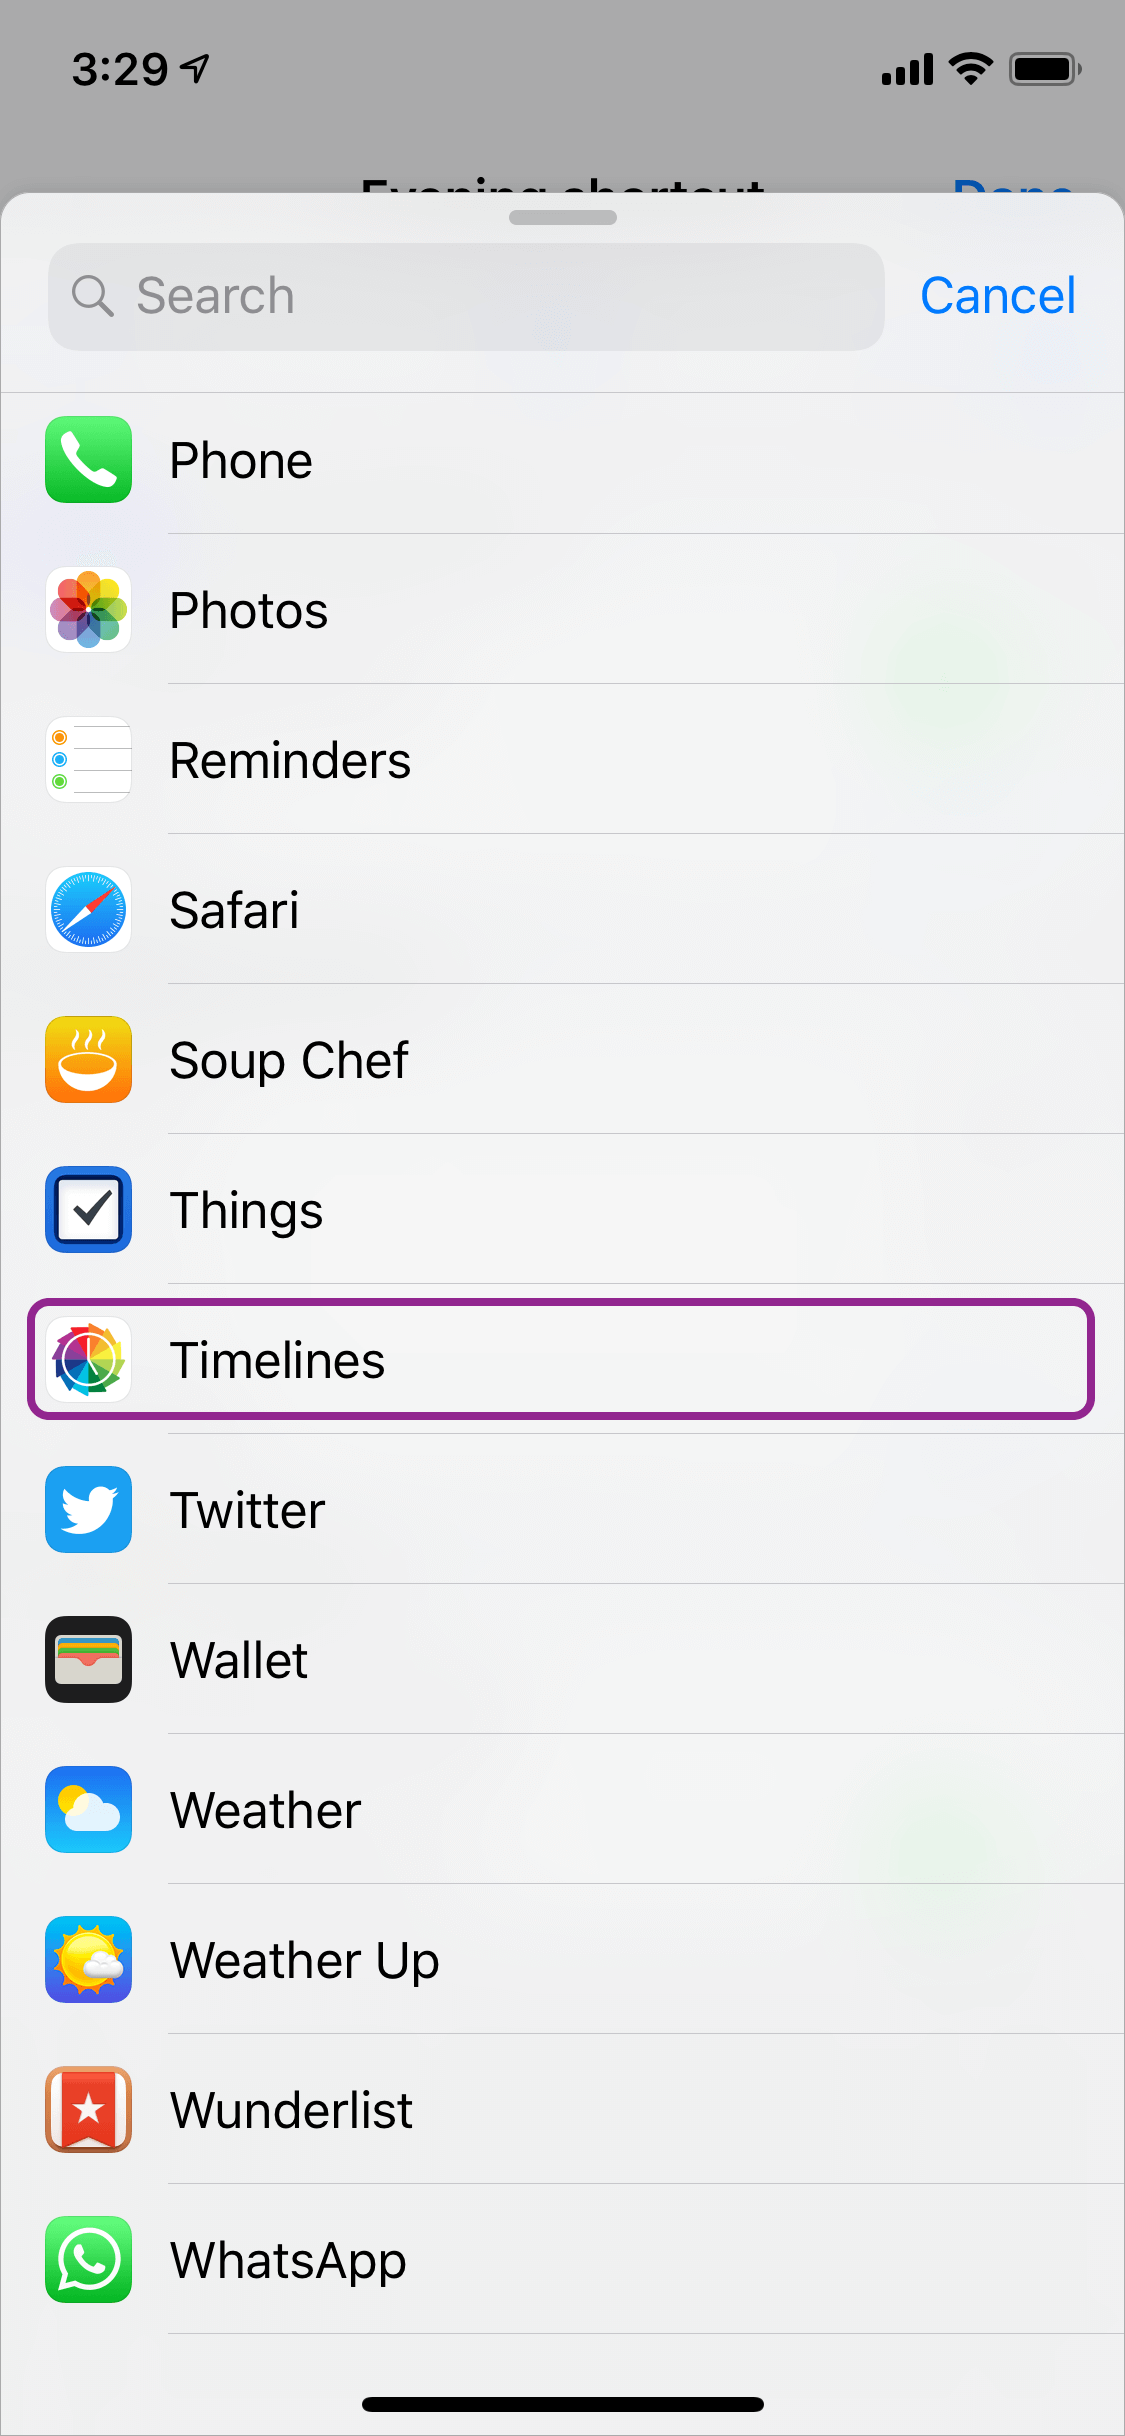 Timelines app Siri Shortcuts adding to Siri